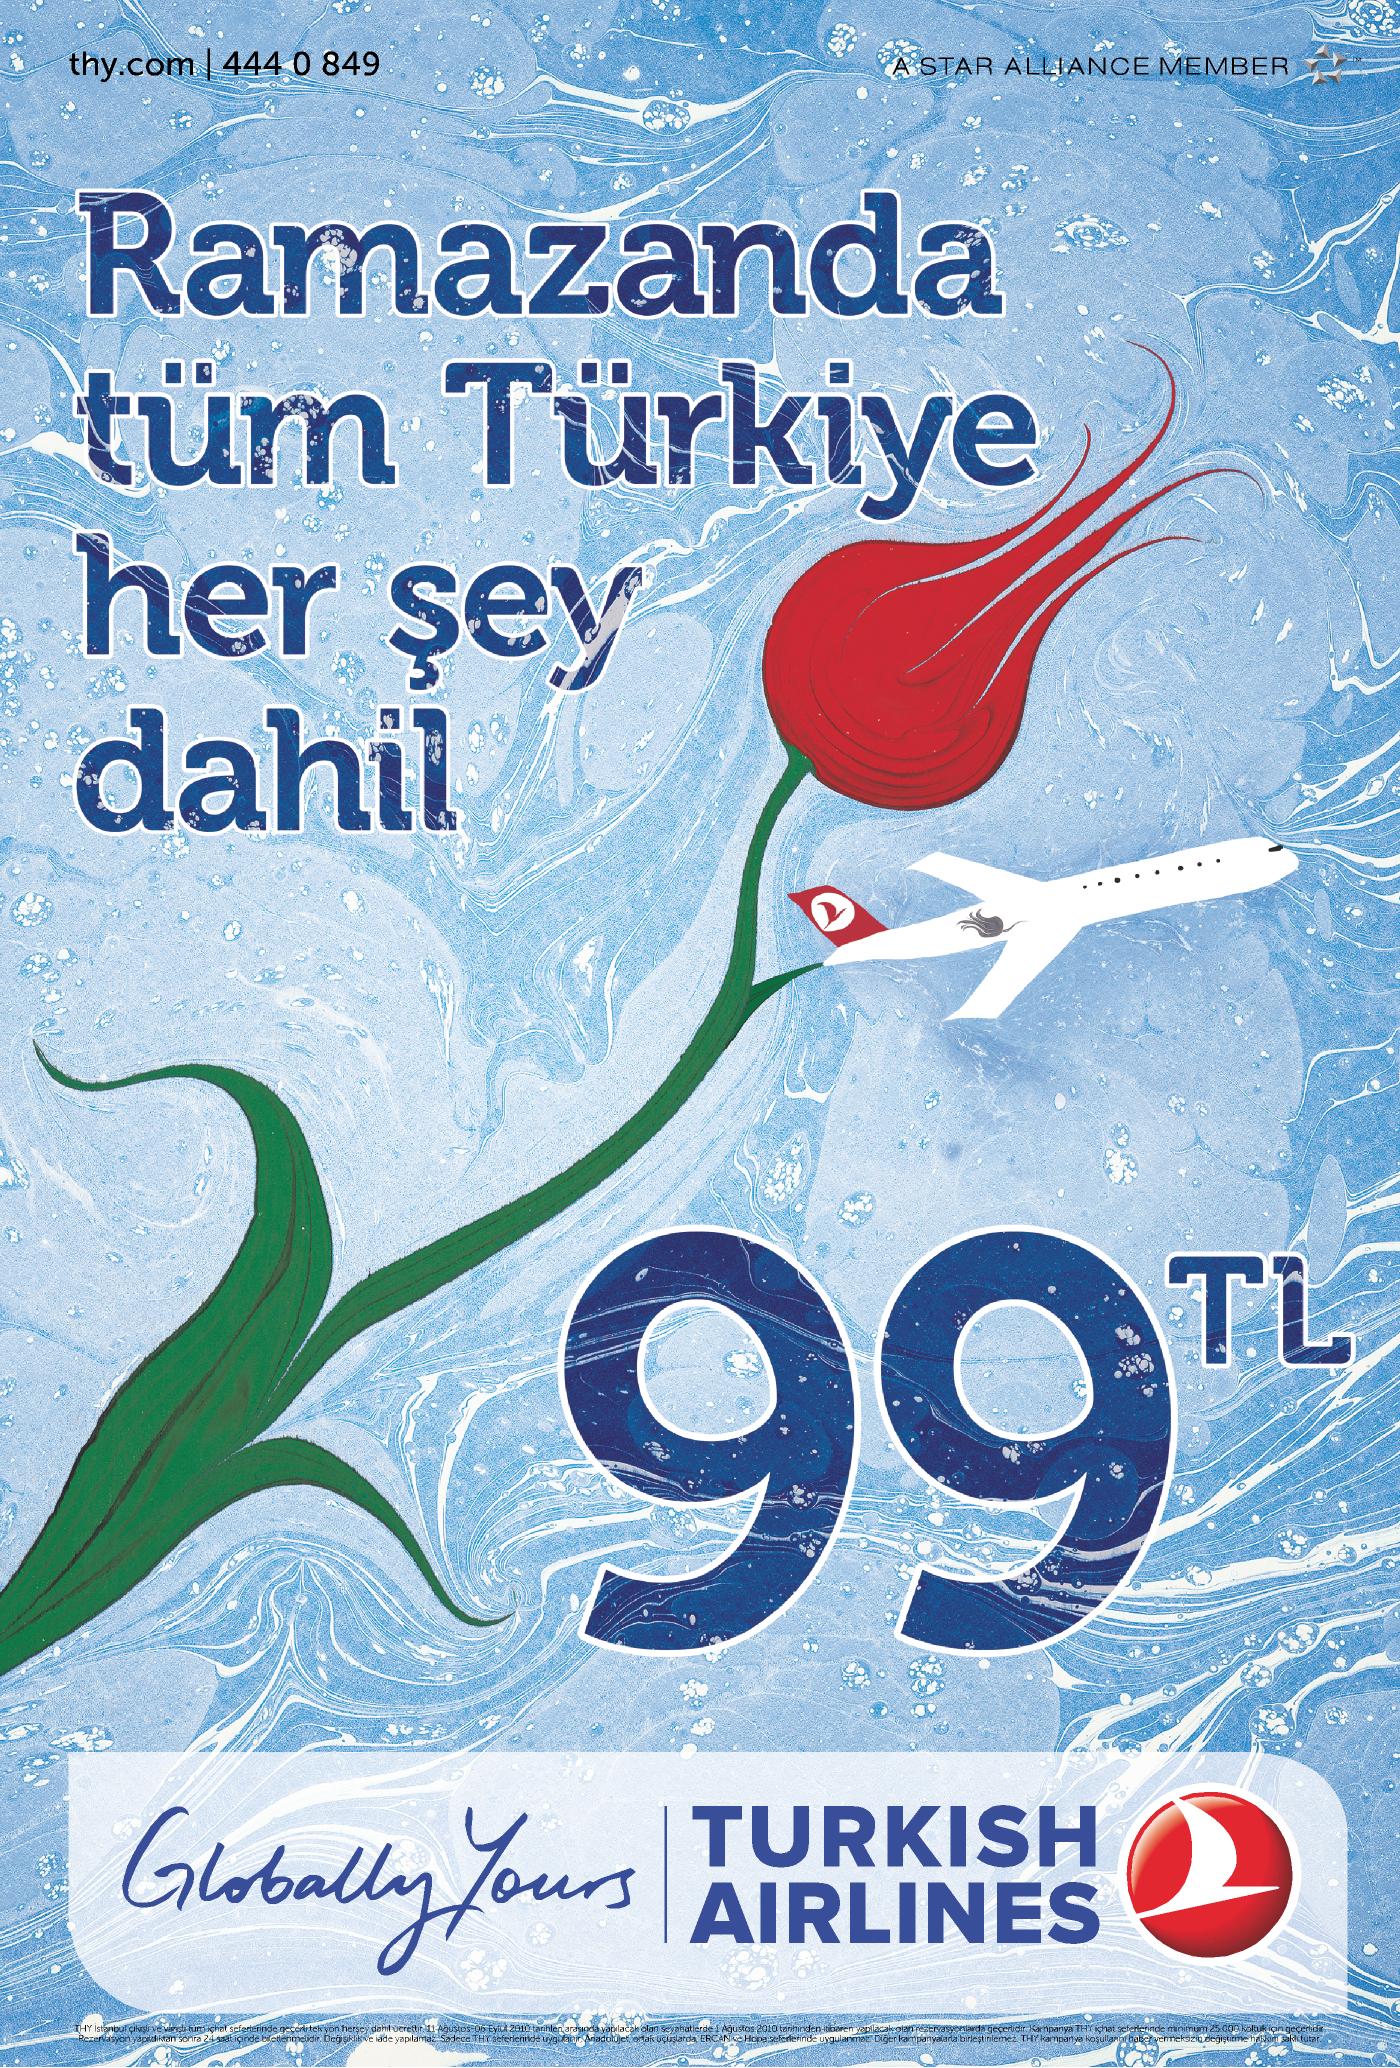 THY’nin “Ebru” Temalı Ramazan Reklamı (2010)